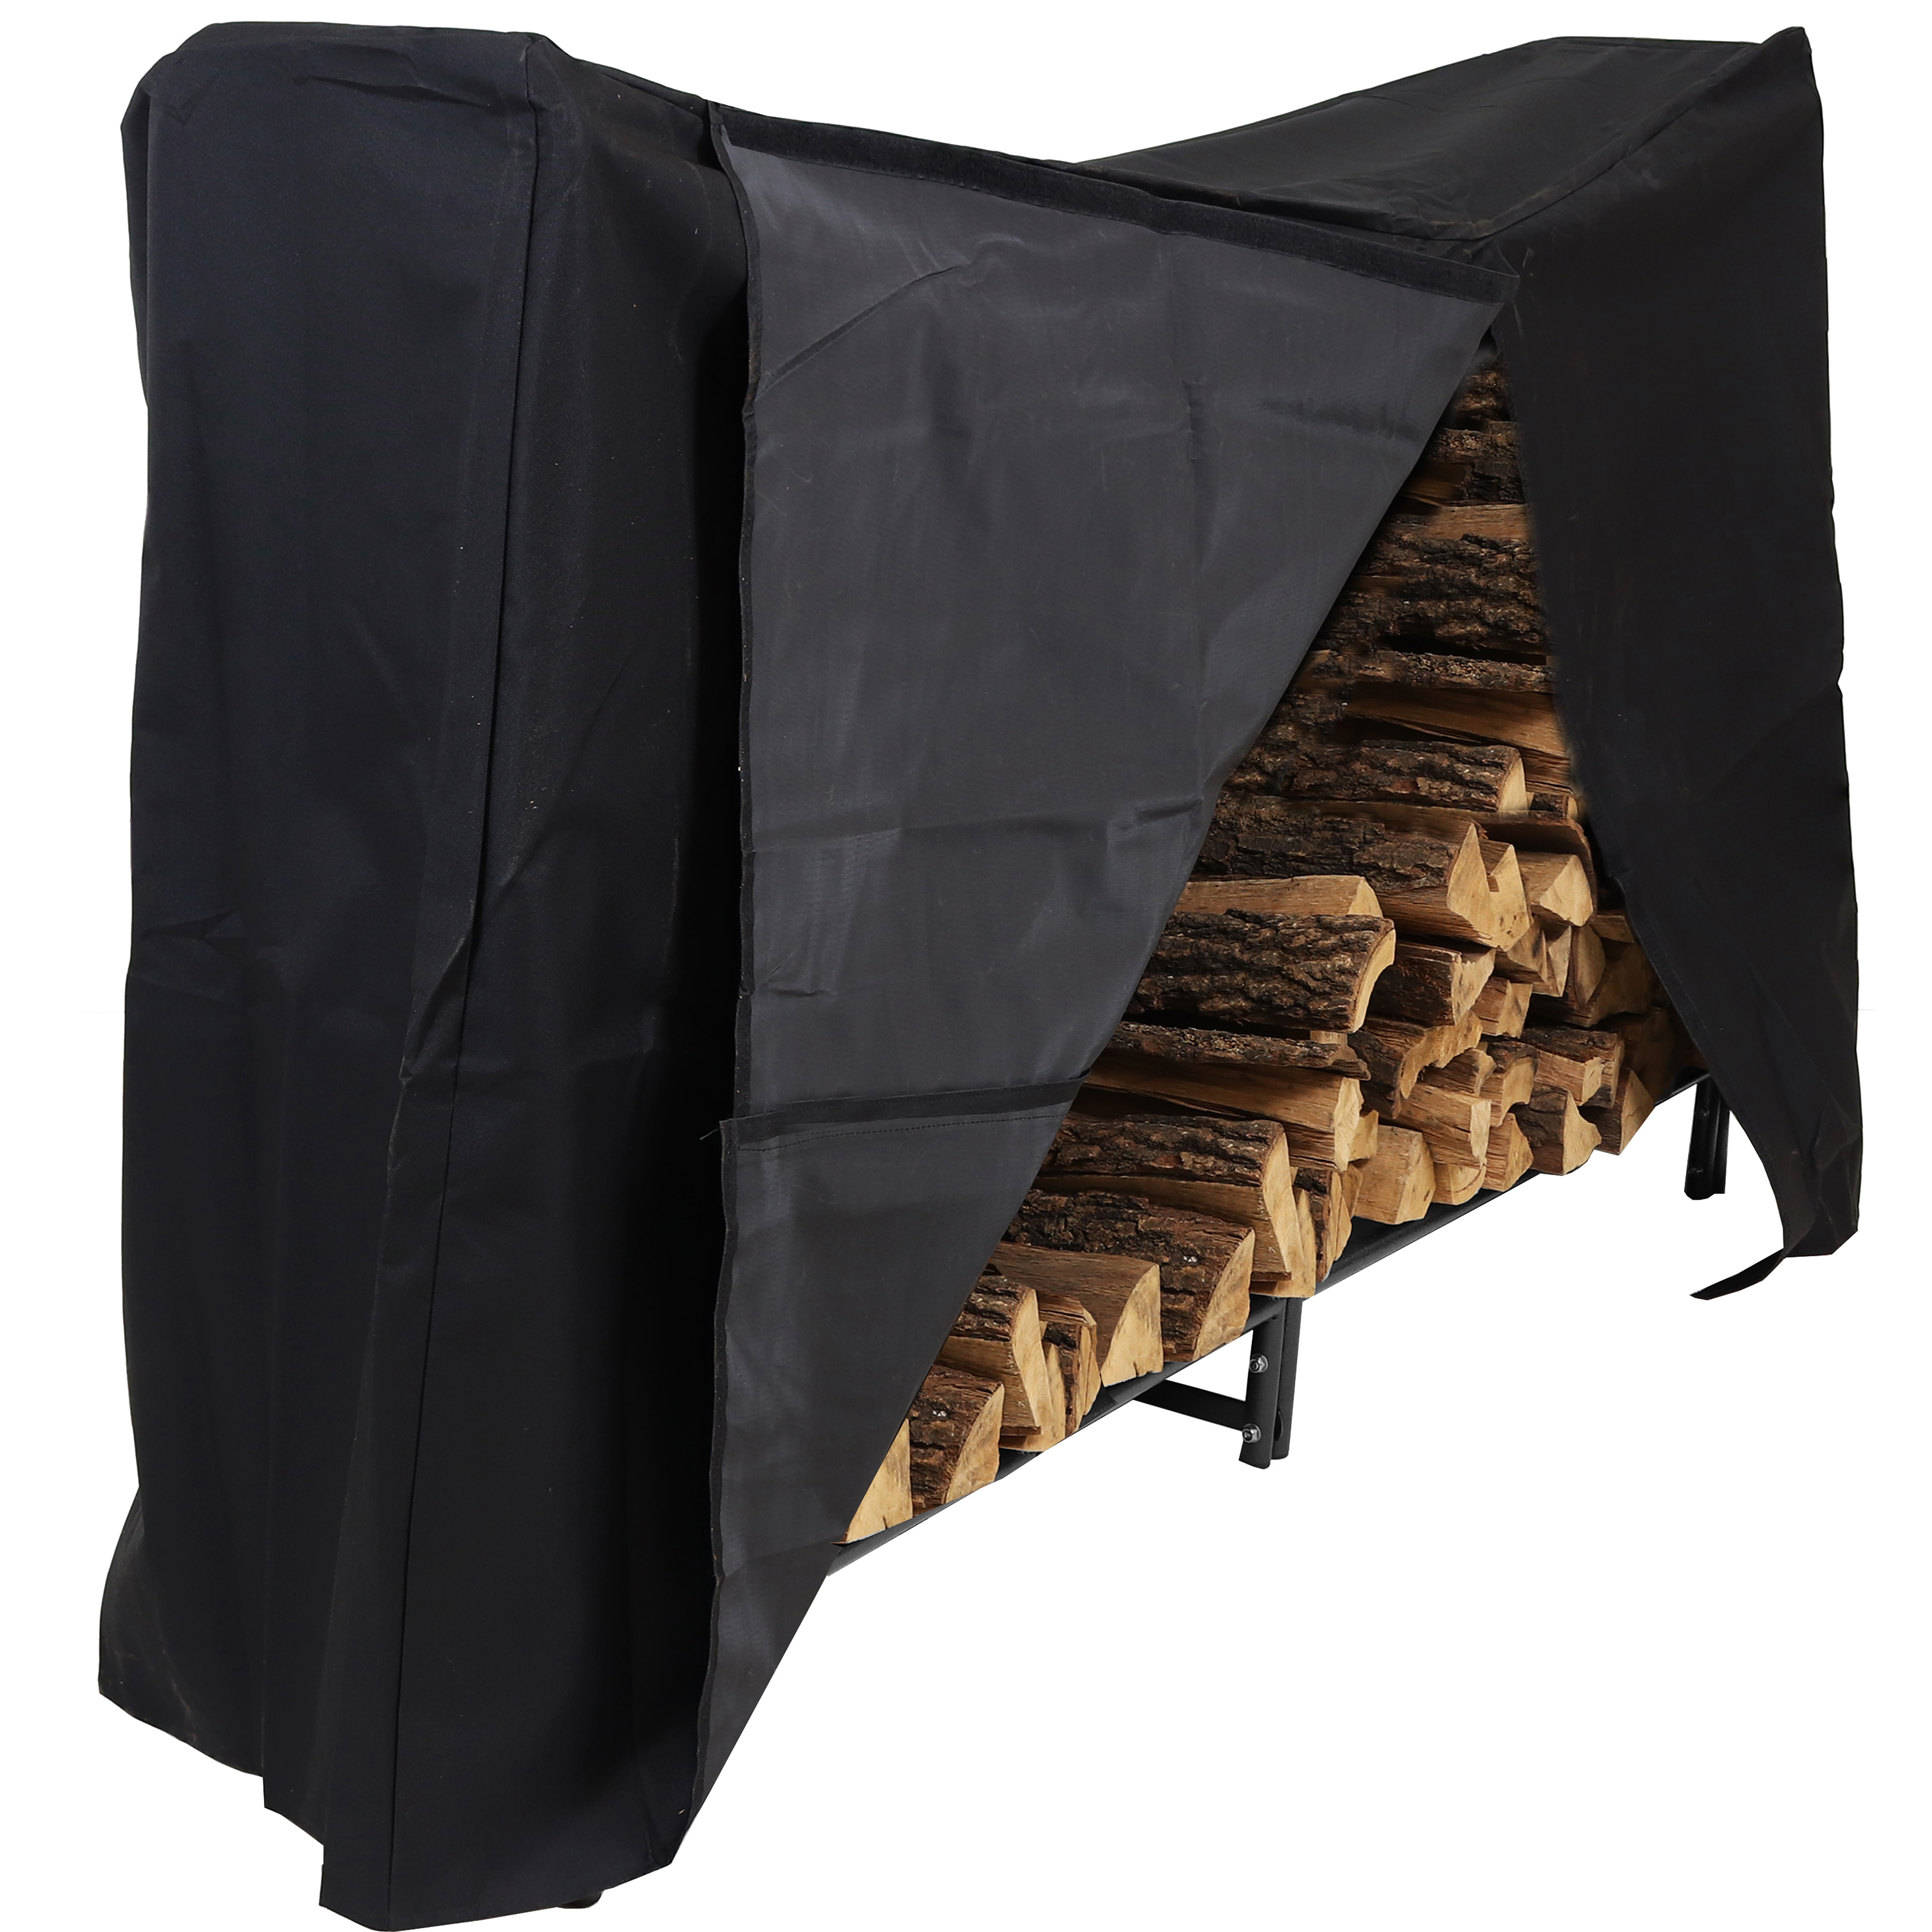 Sunnydaze Decorative Firewood Log Rack, 6 Foot, Log Rack &amp; Cover COMBO